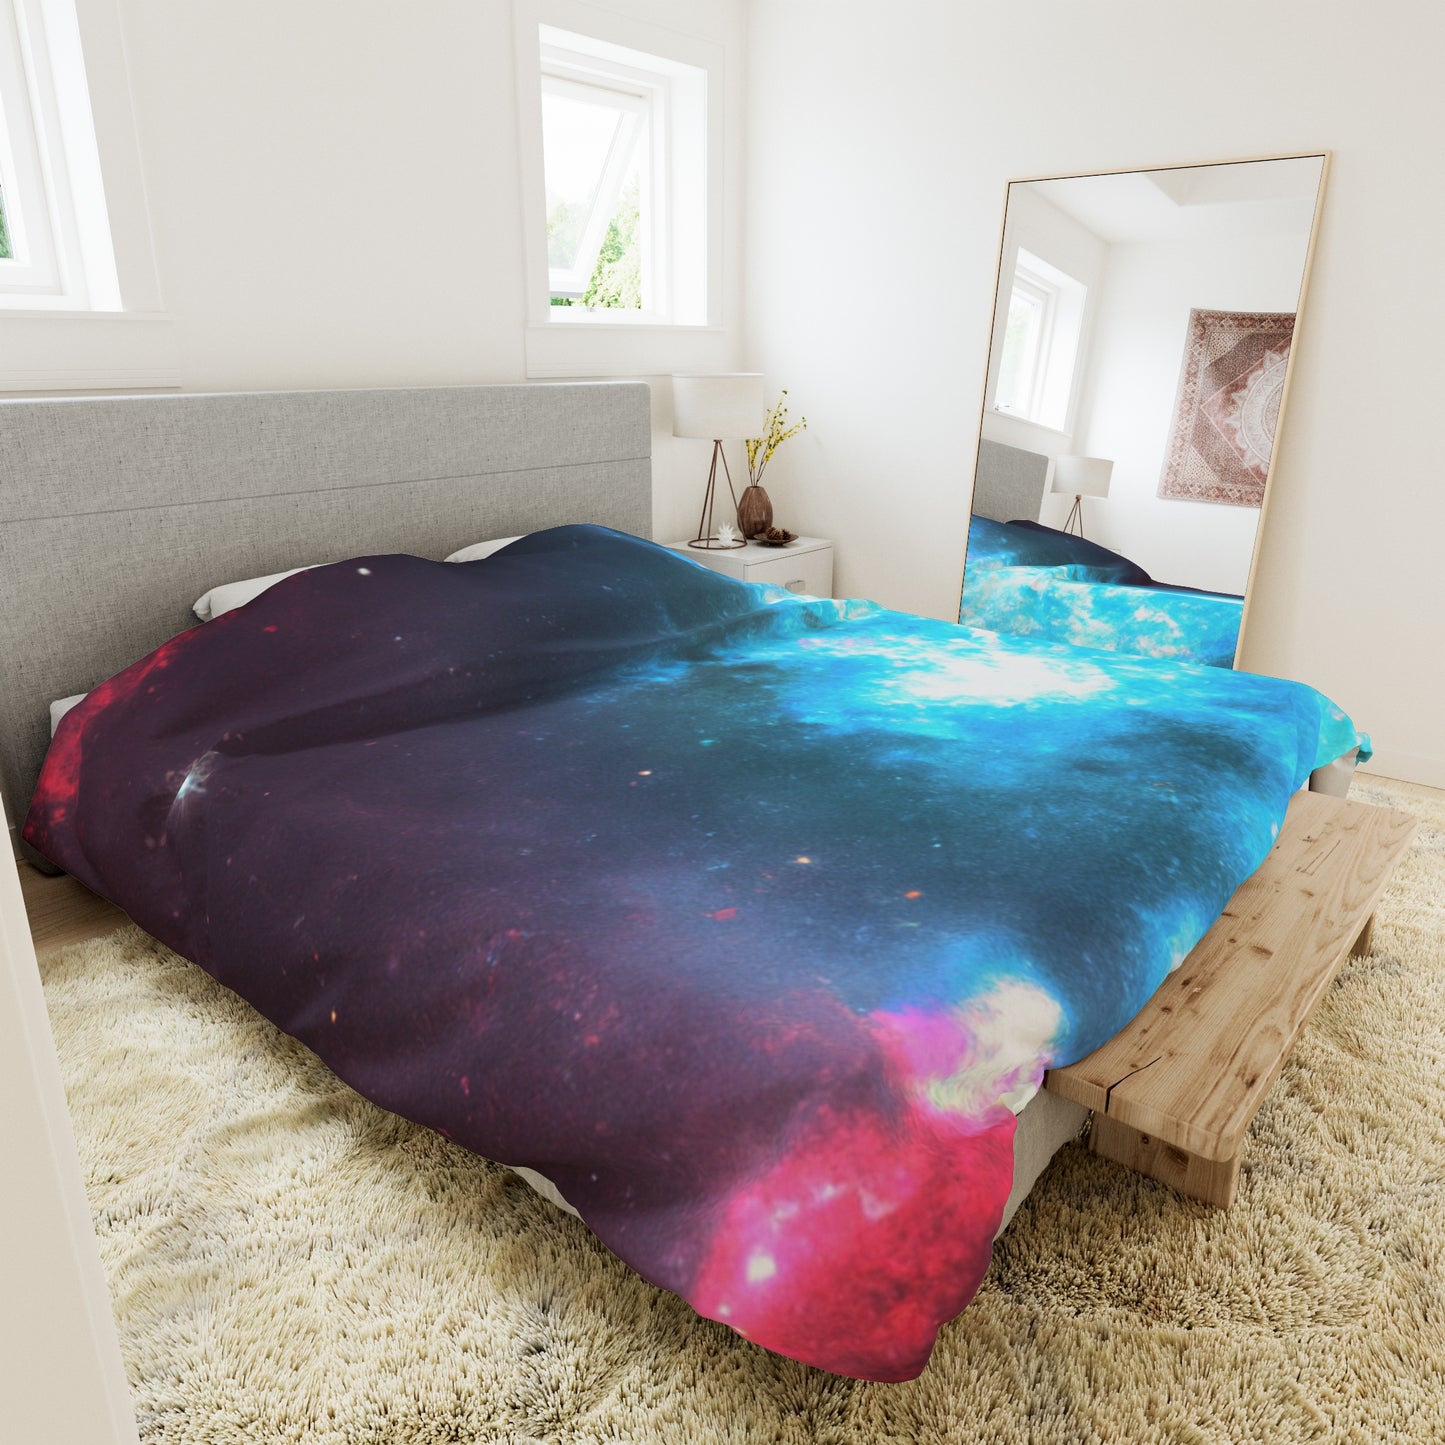 Dreamy Dan's Dreamwalker - Astronomy Duvet Bed Cover